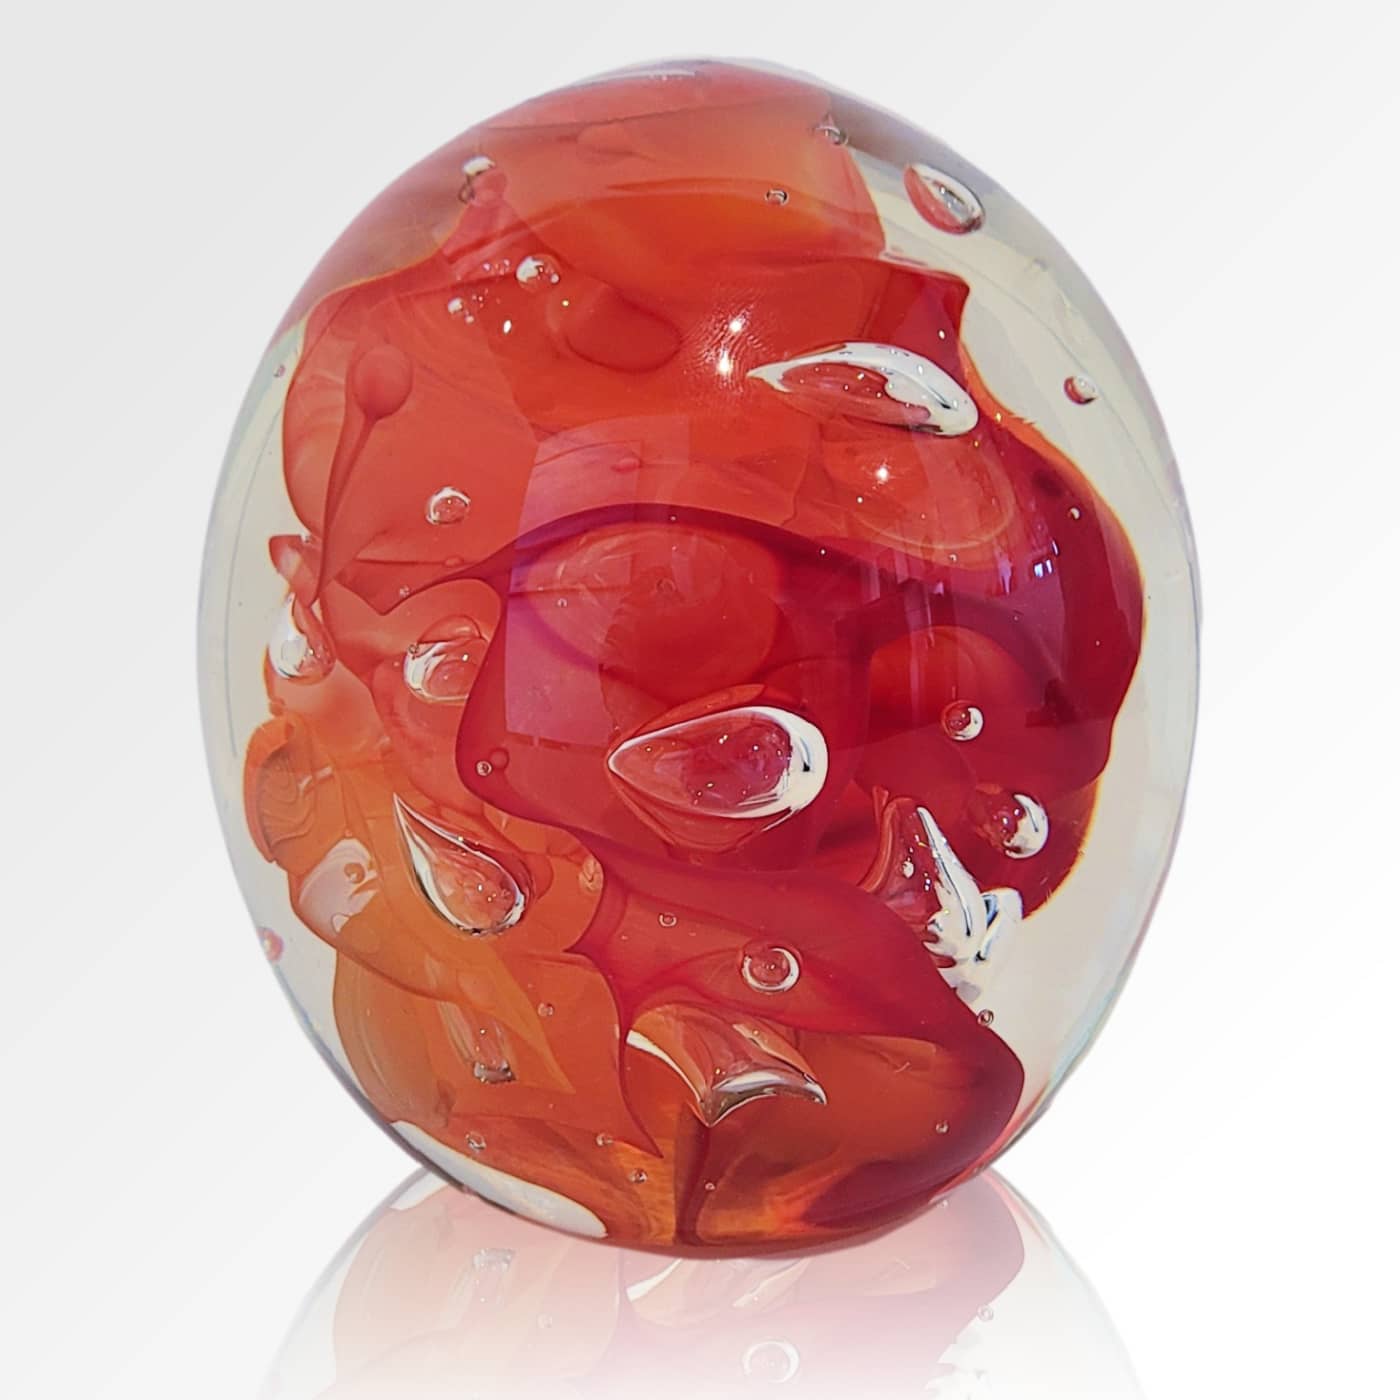 Peninsula-Based Australian Glass Artist Roberta Easton ~ 'Bubbly Sphere, Lava' - Curate Art & Design Gallery Sorrento Mornington Peninsula Melbourne